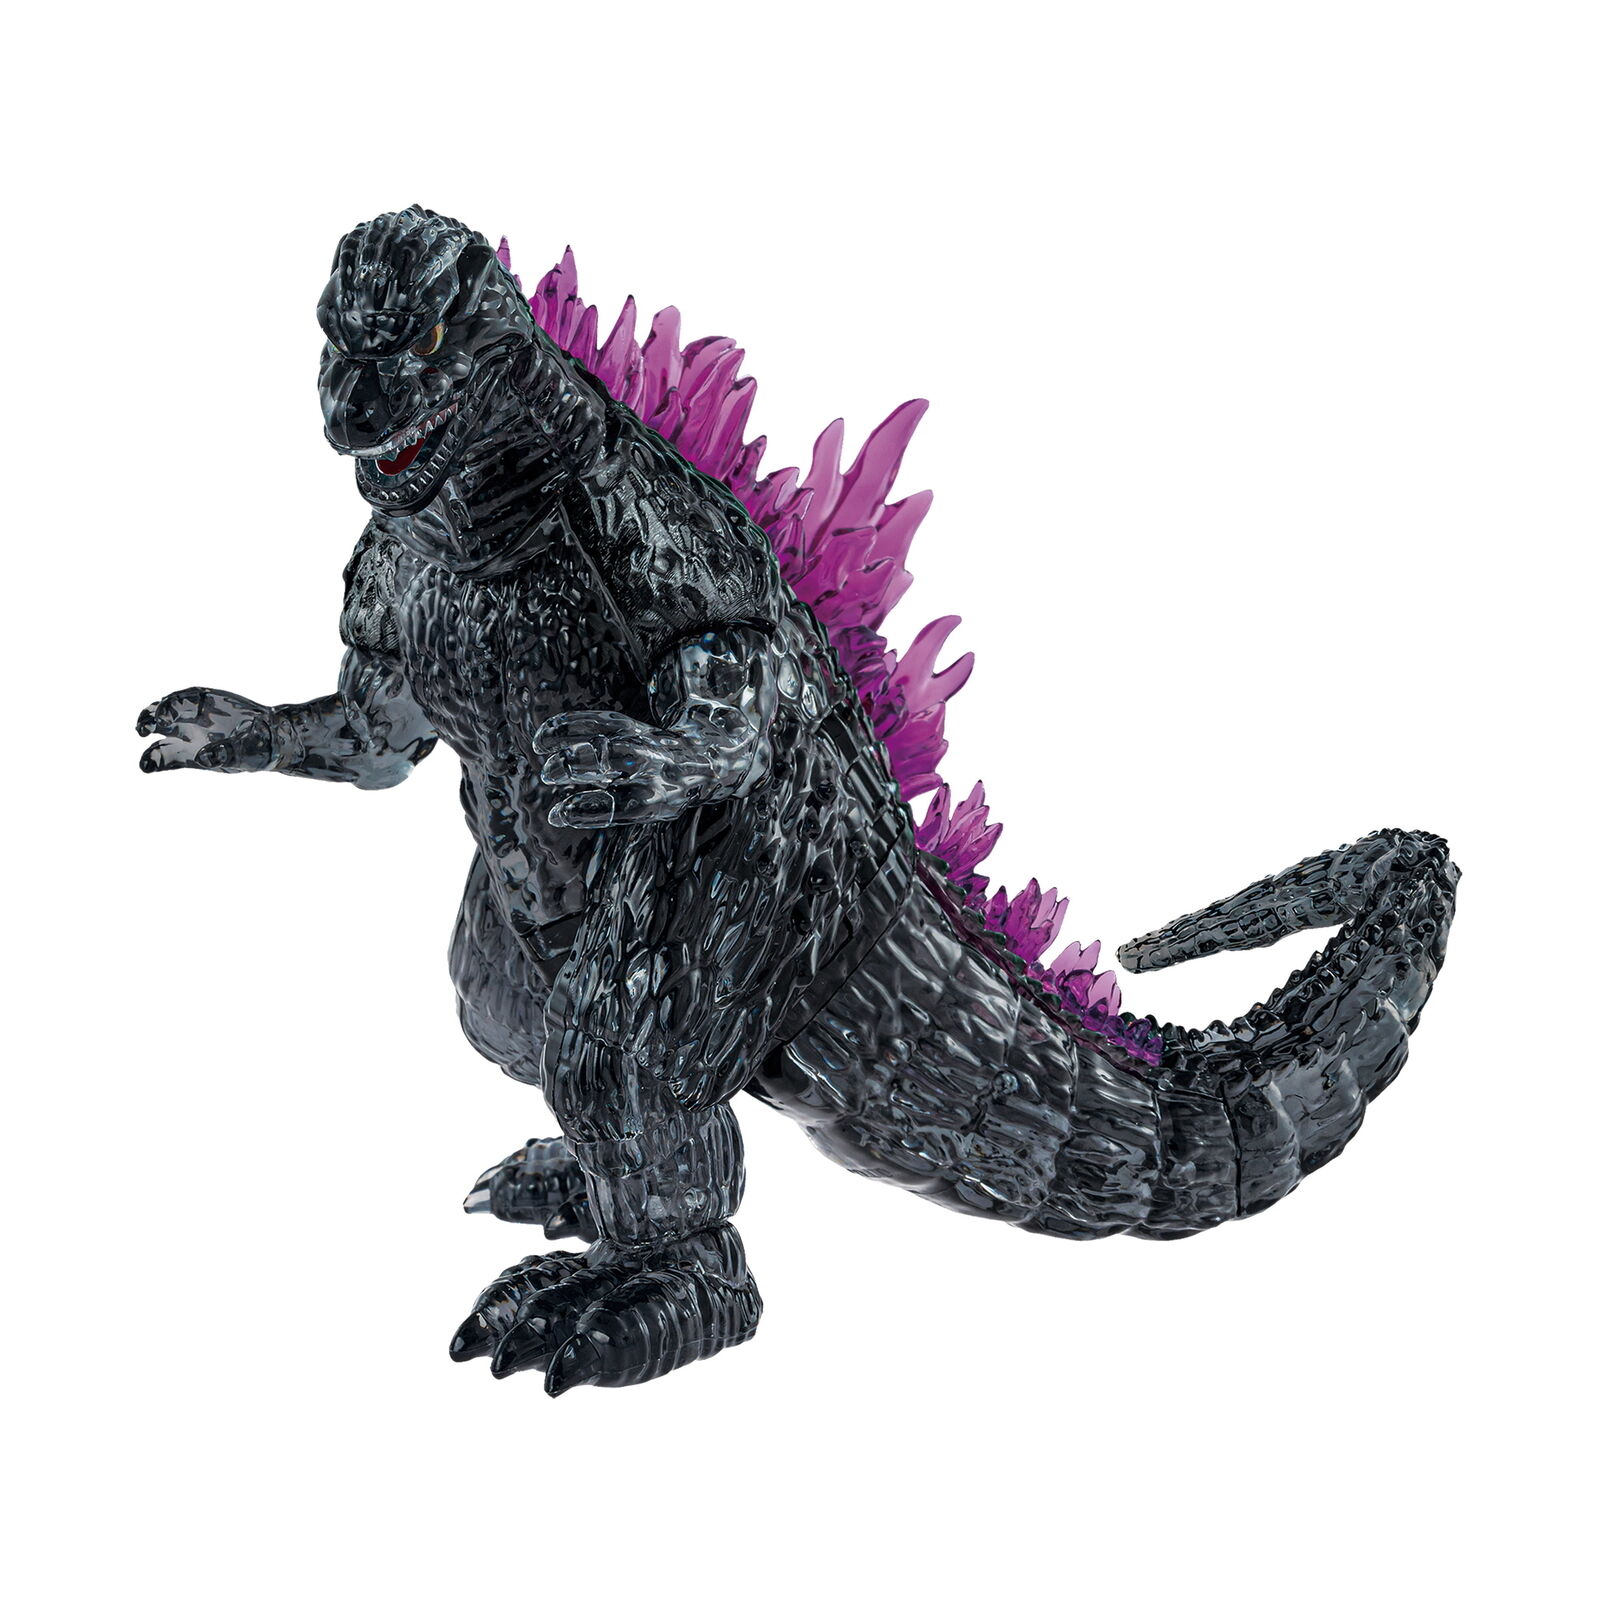 3D Crystal Puzzle - Godzilla: 71 Pcs